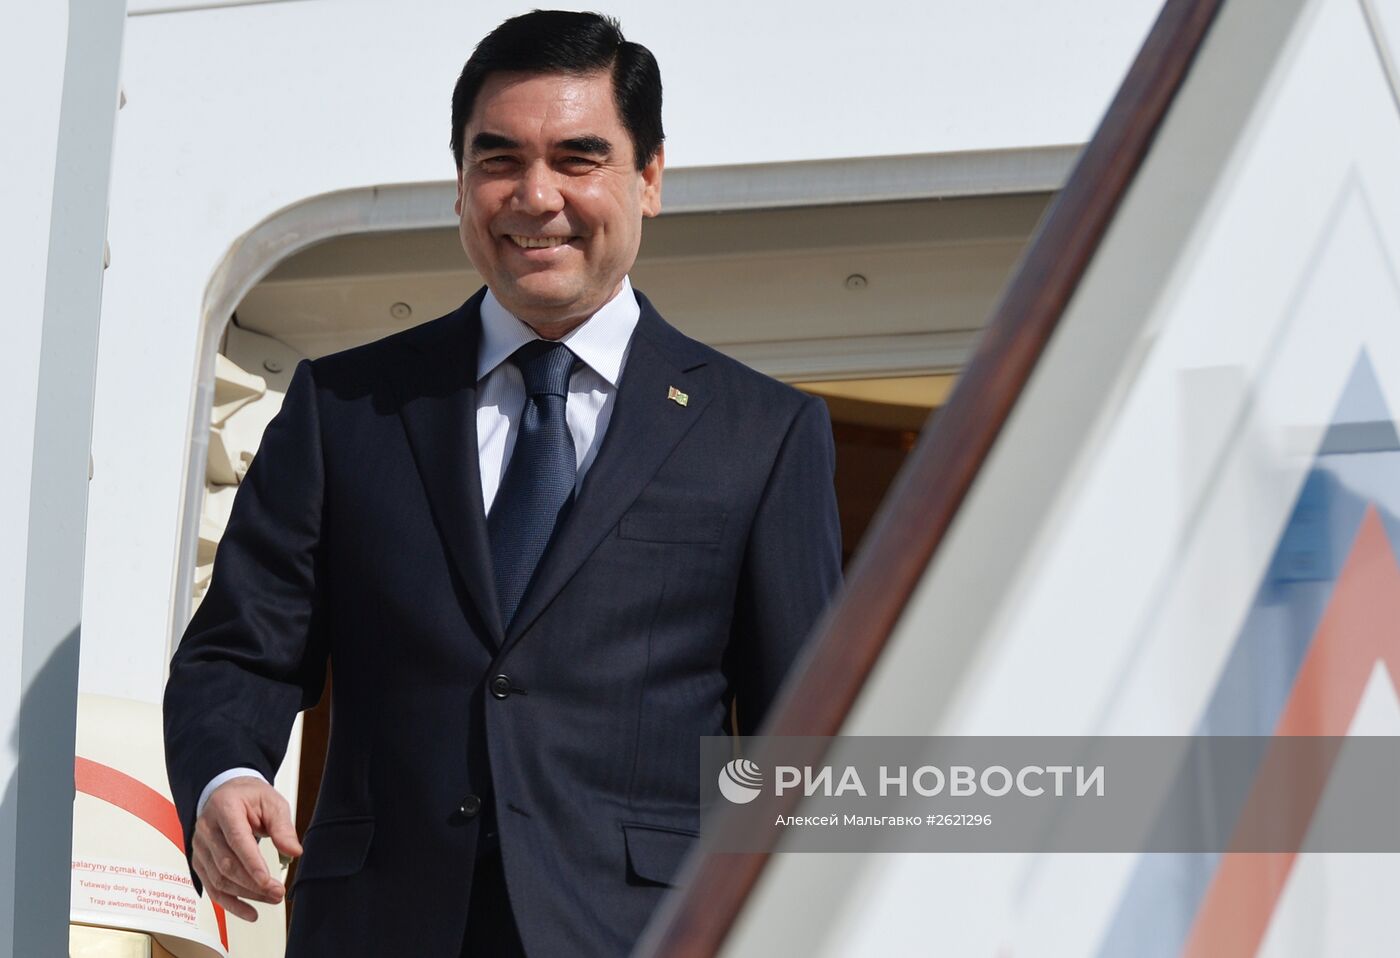 Прилет президента Туркменистана Гурбангулы Бердымухамедова в Москву